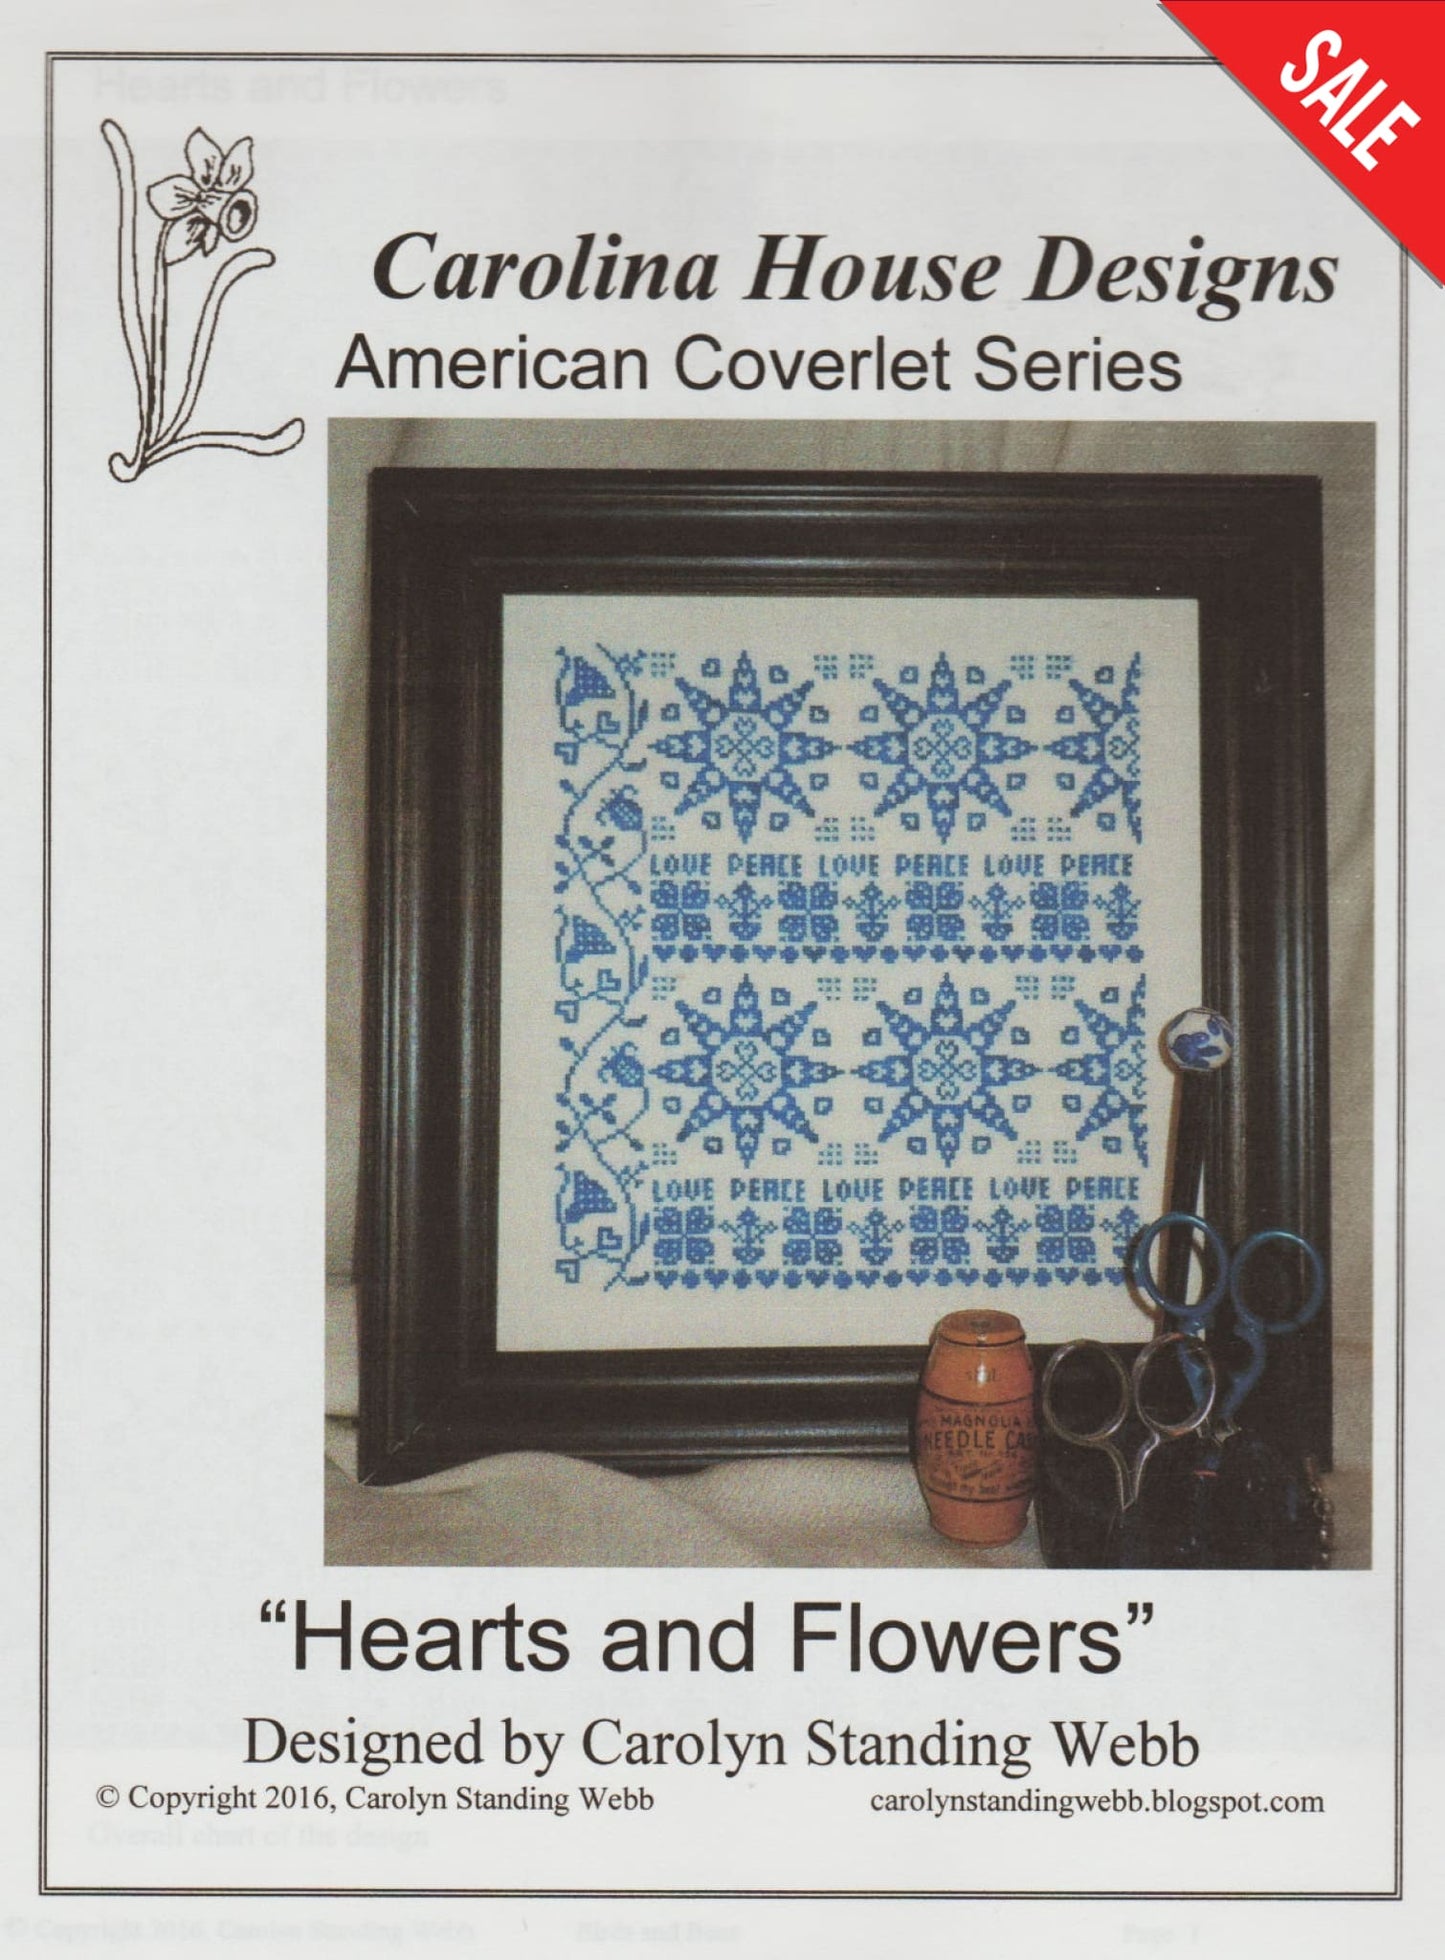 Carolina House Designs Hearts and Flowers cross stitch sampler pattern